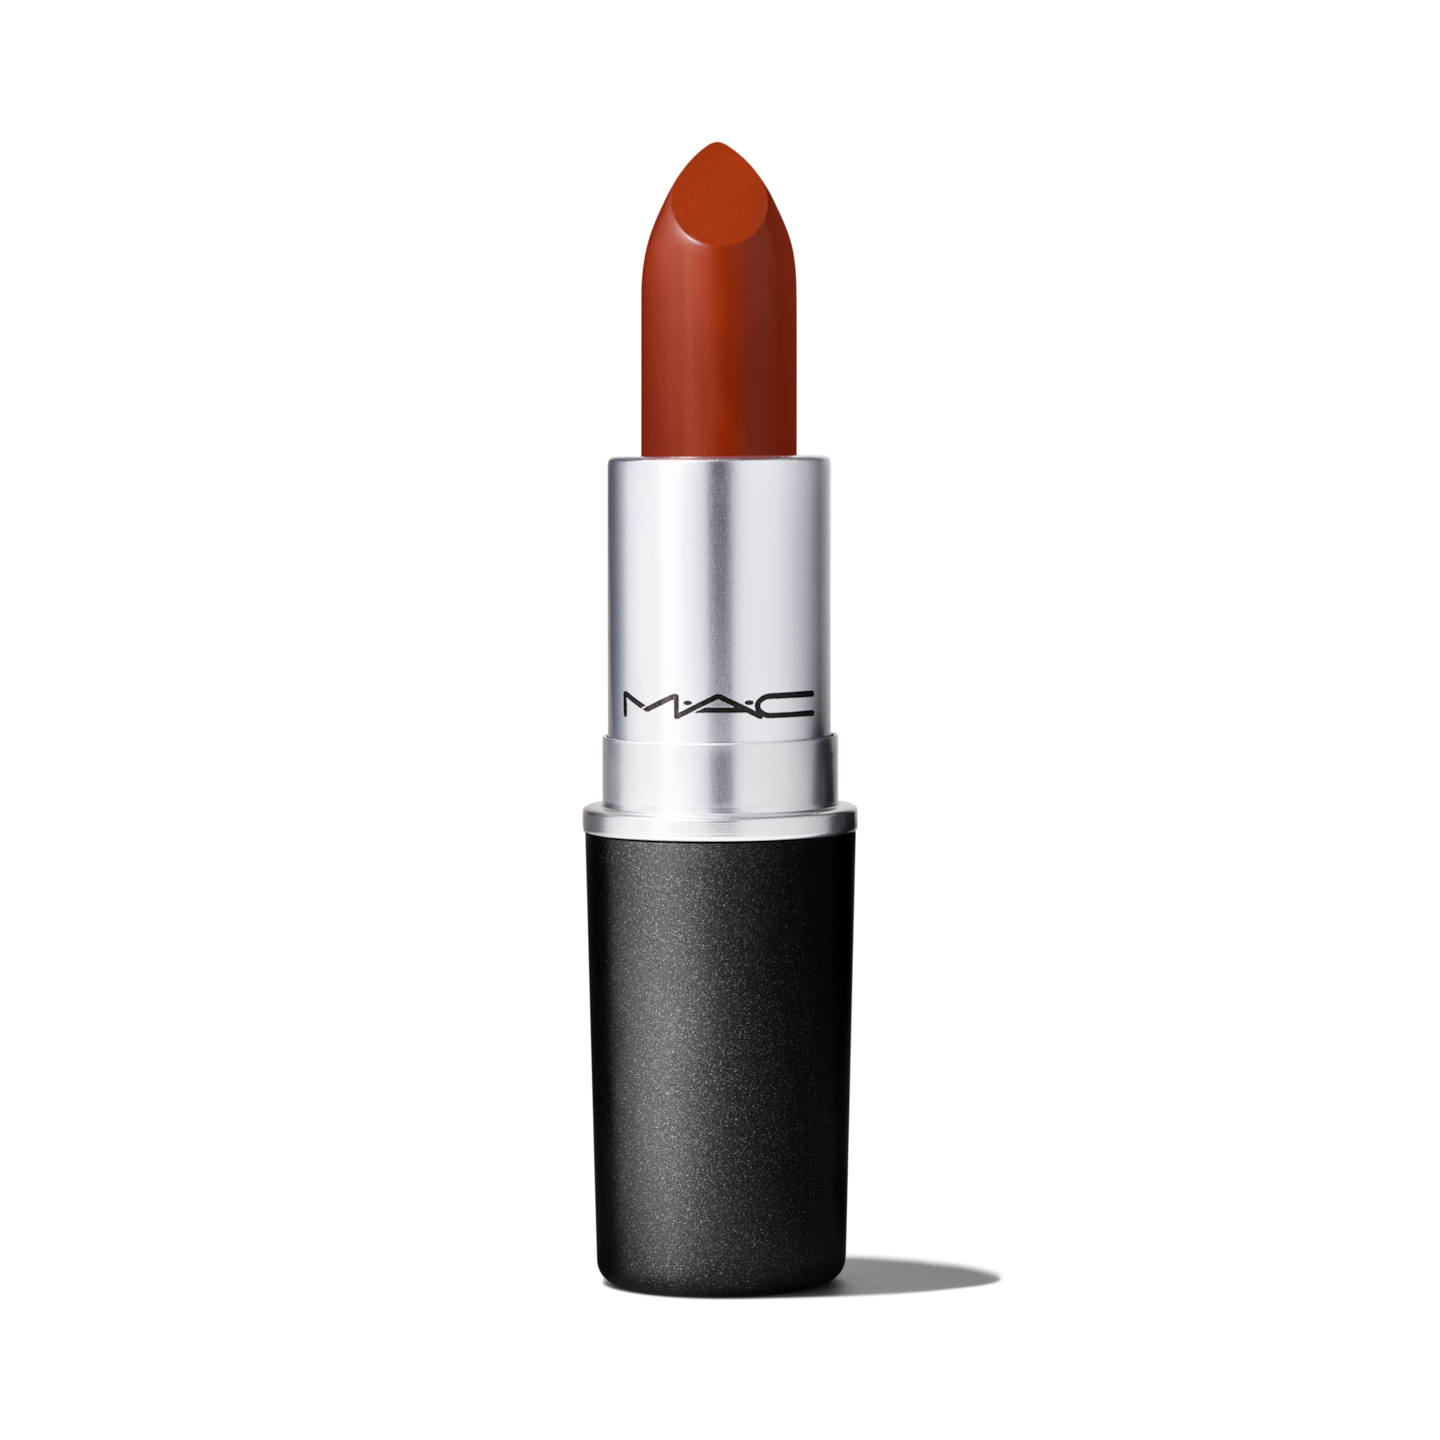 chanel lipstick 212